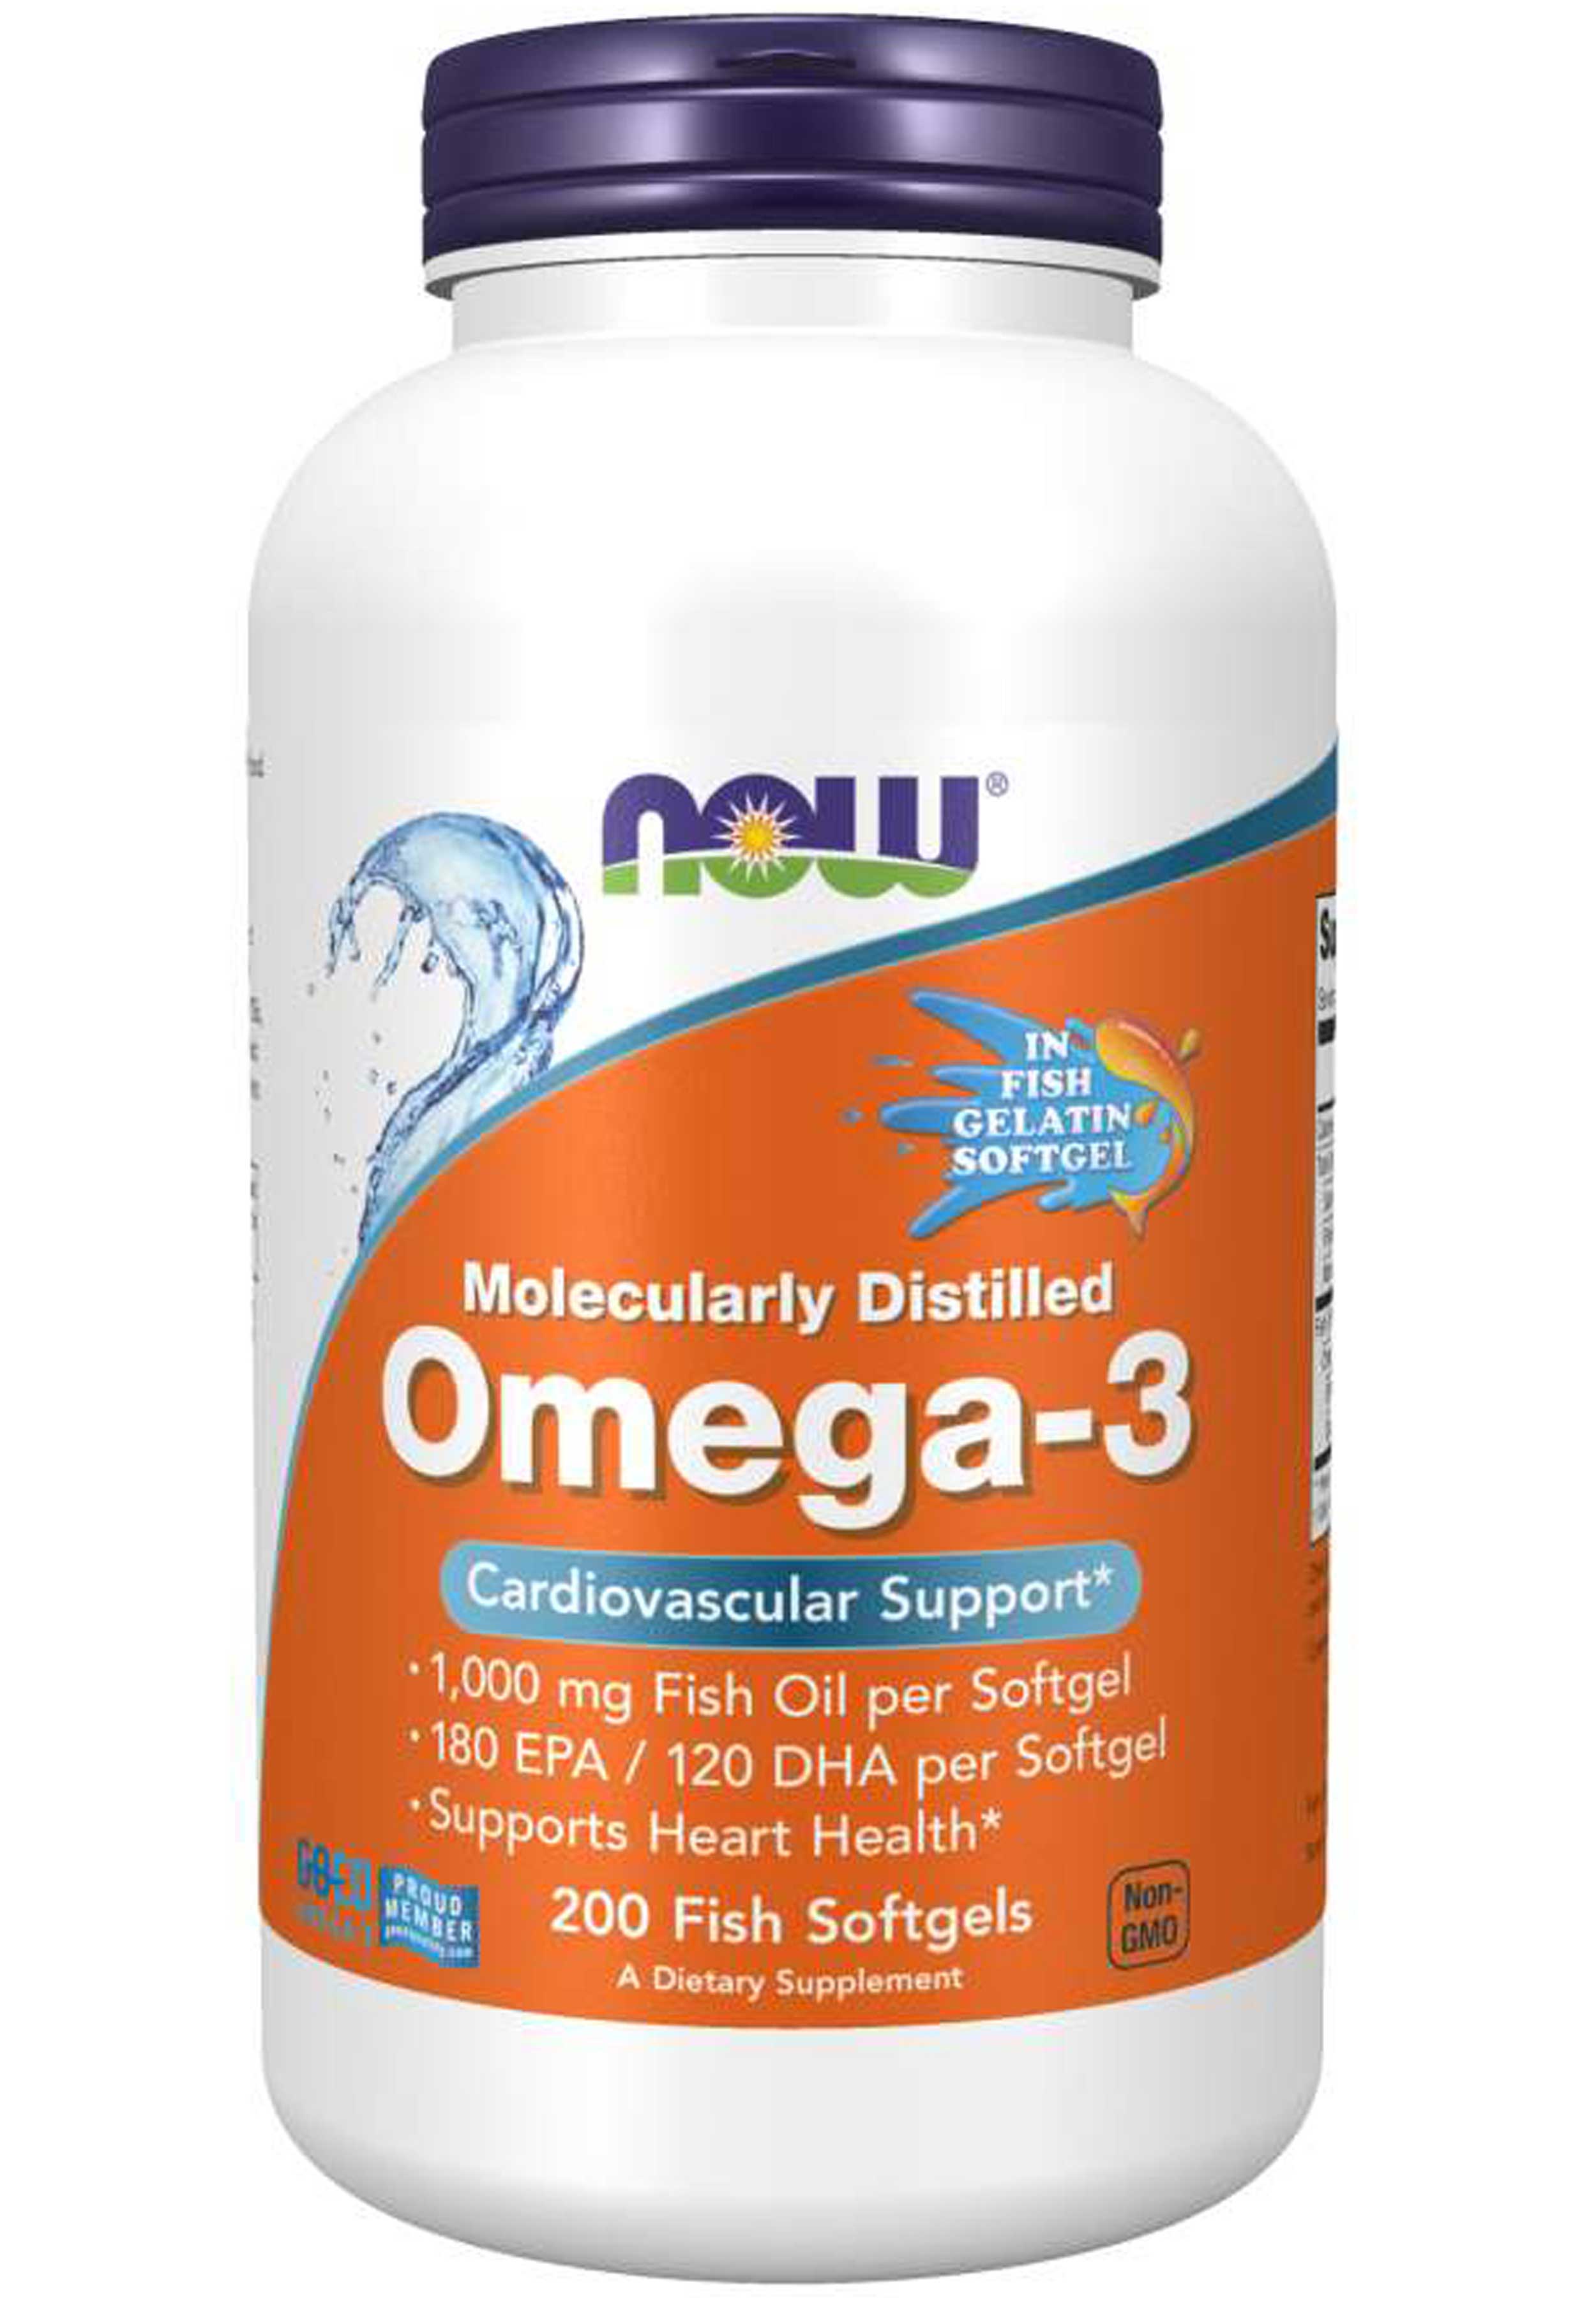 NOW Omega-3 Molecularly Distilled FISH Softgels